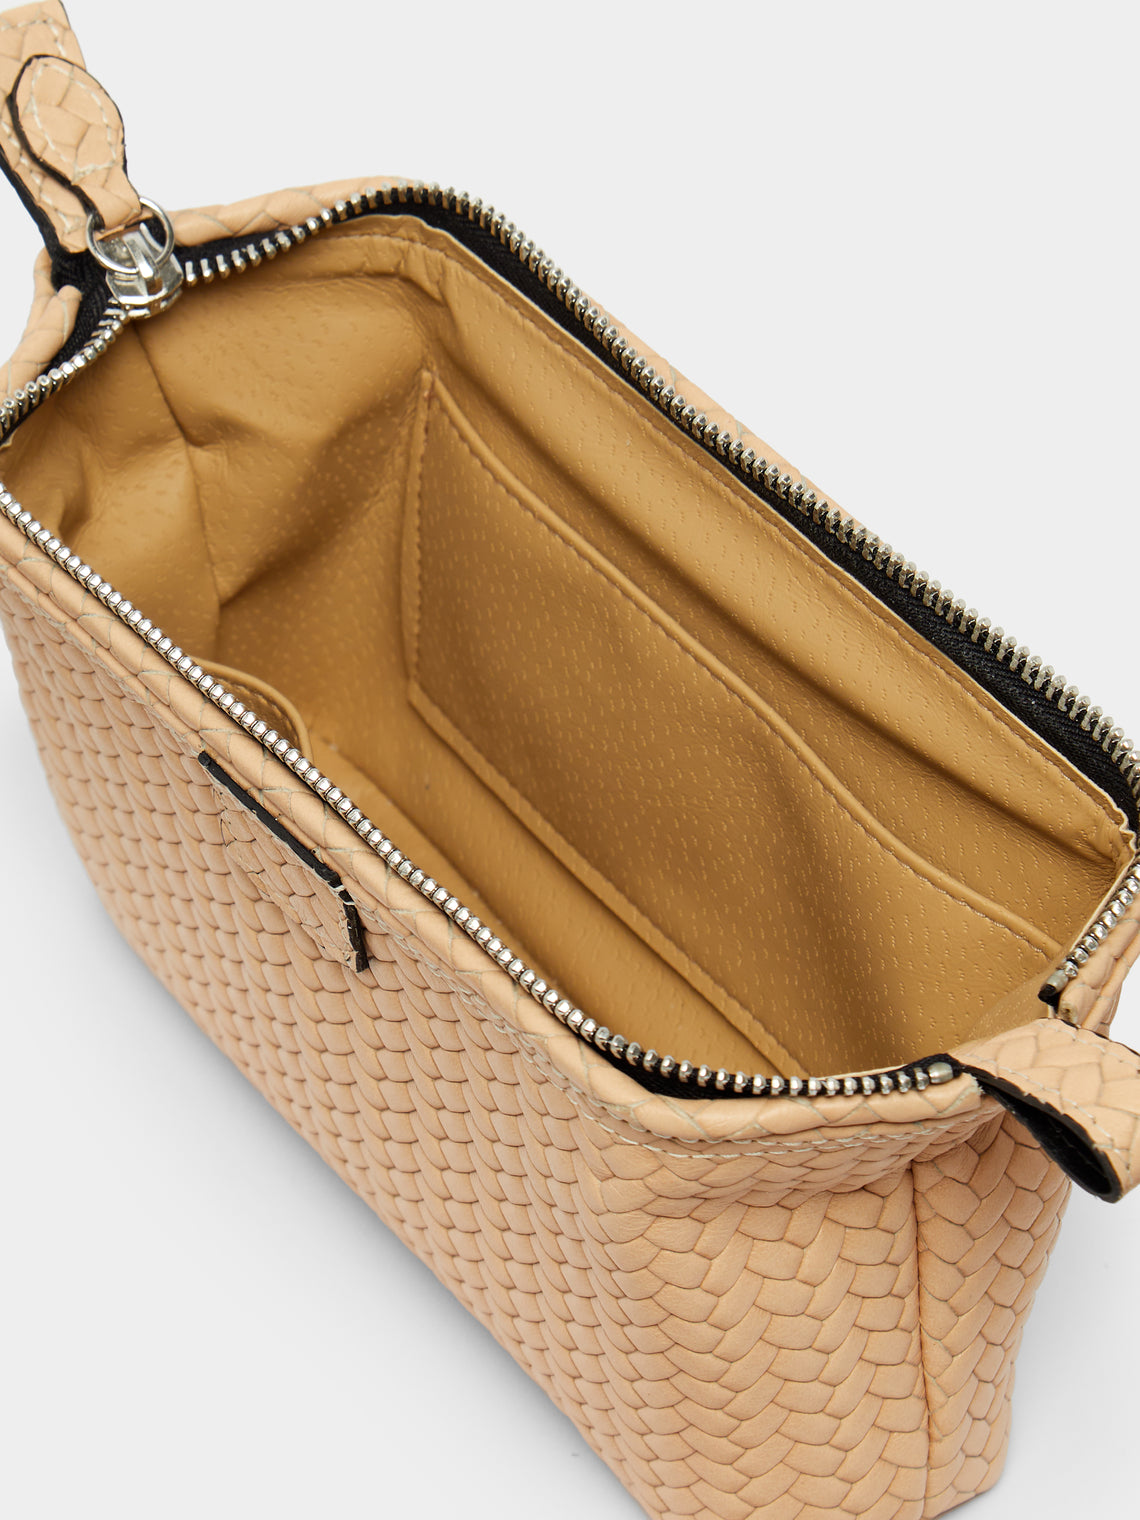 F. Hammann - Leather Small Wash Bag -  - ABASK